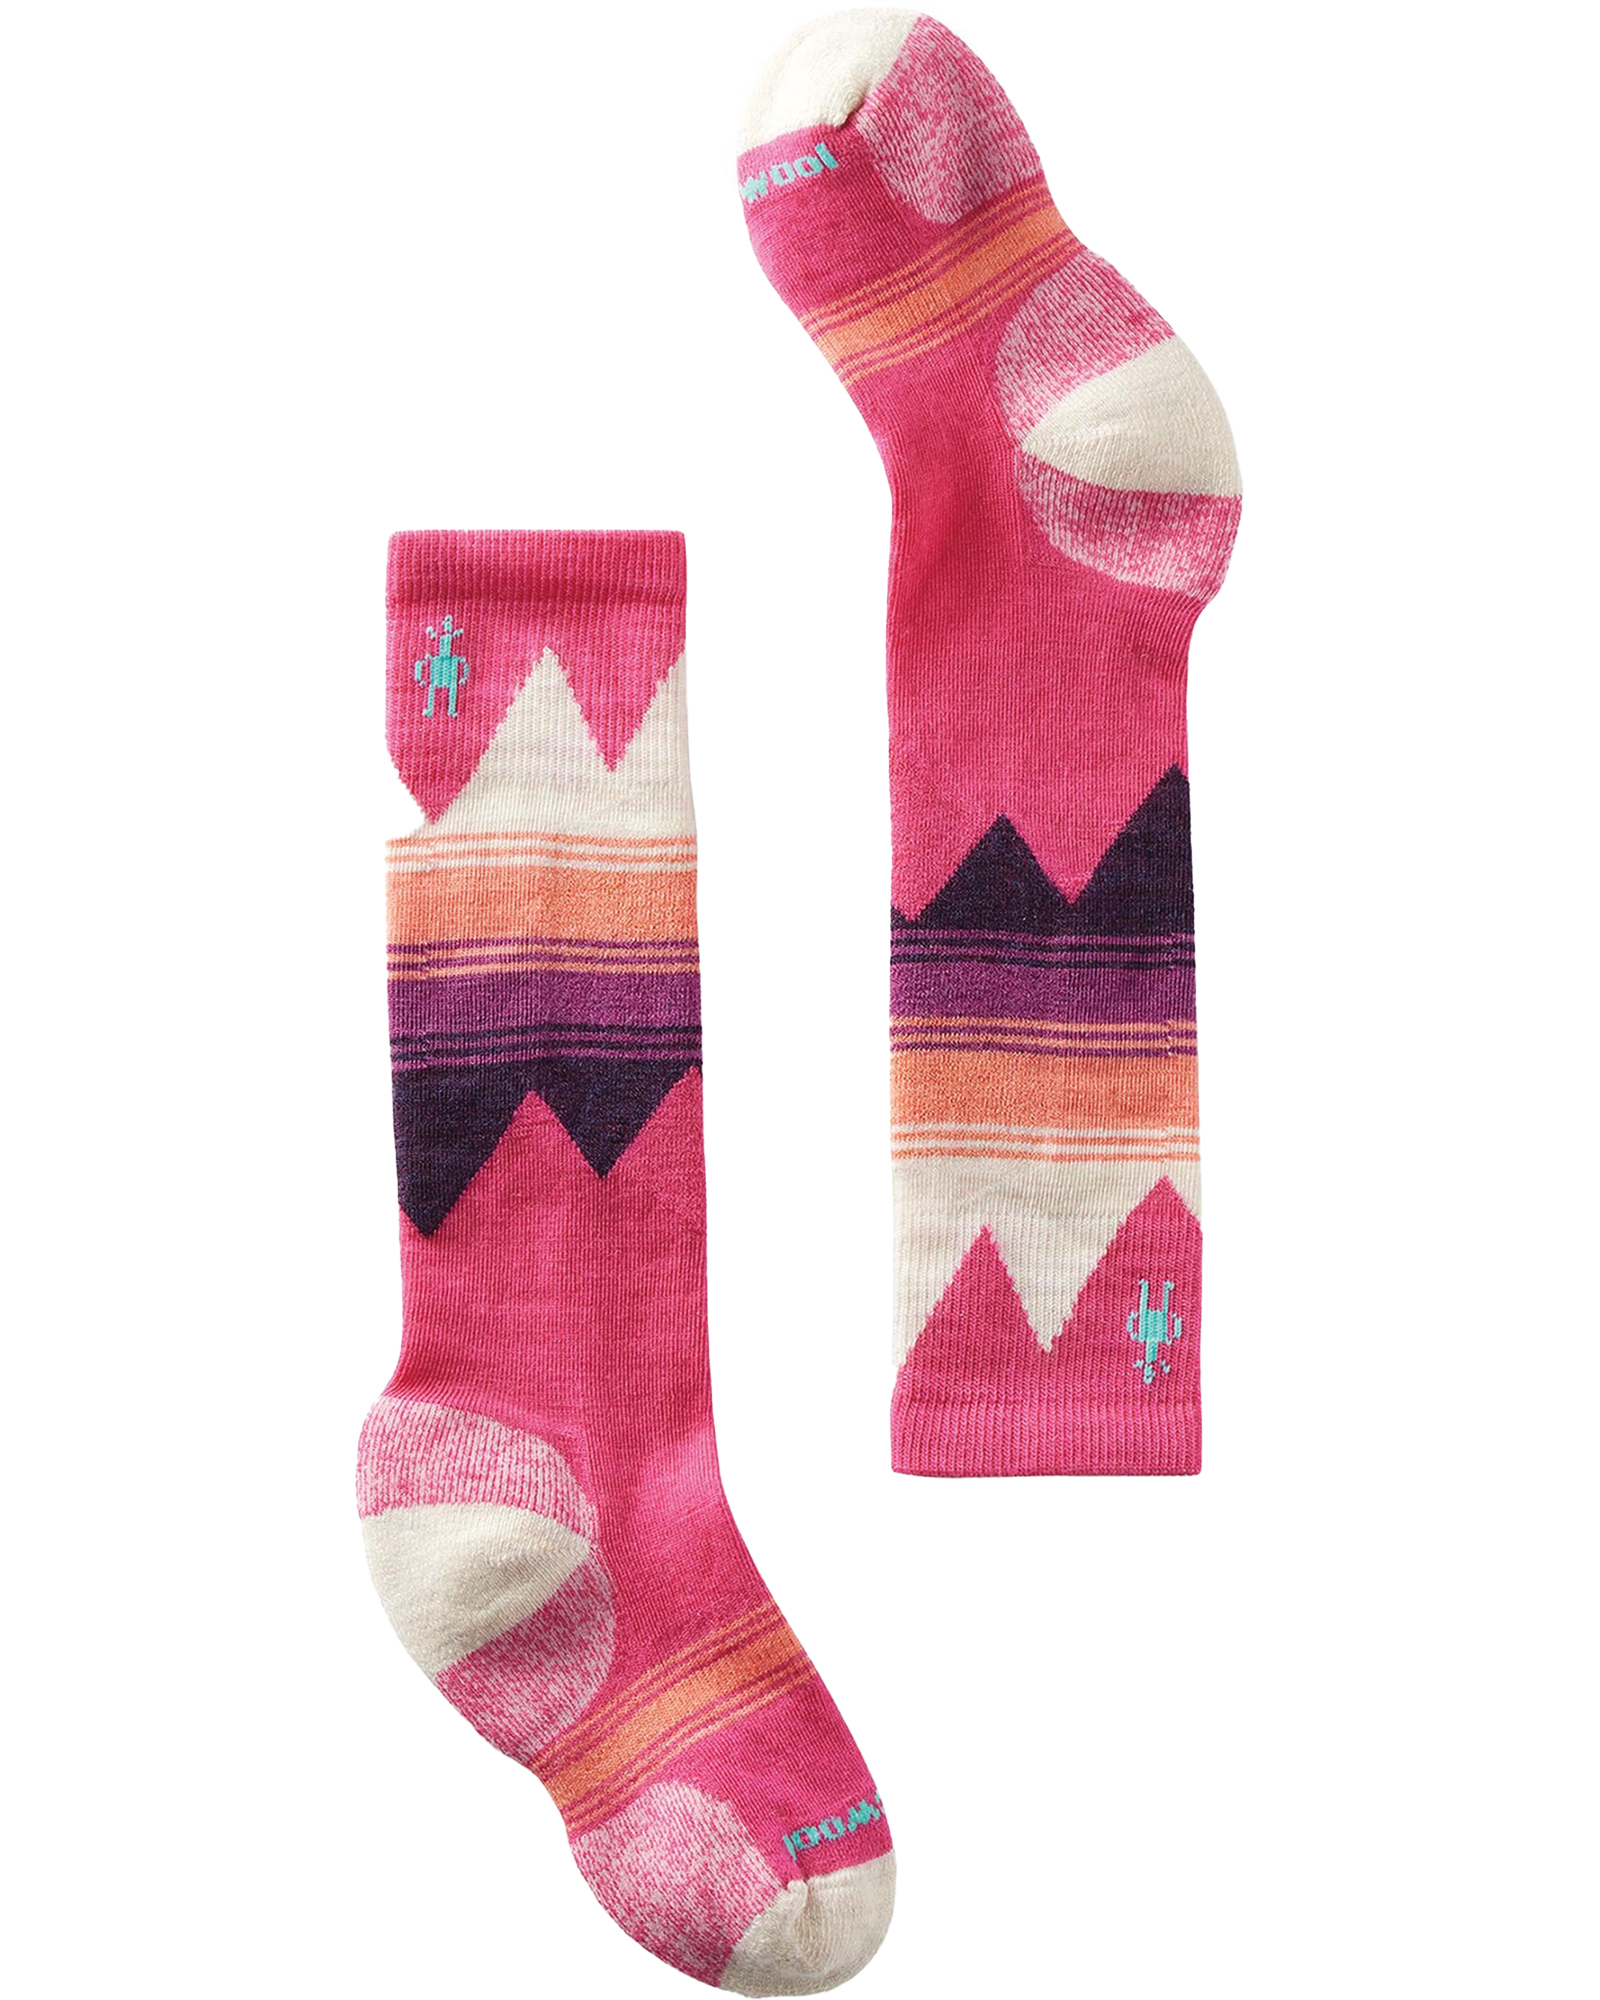 Smartwool Light Cushion Kids’ Ski Socks - Power Pink S